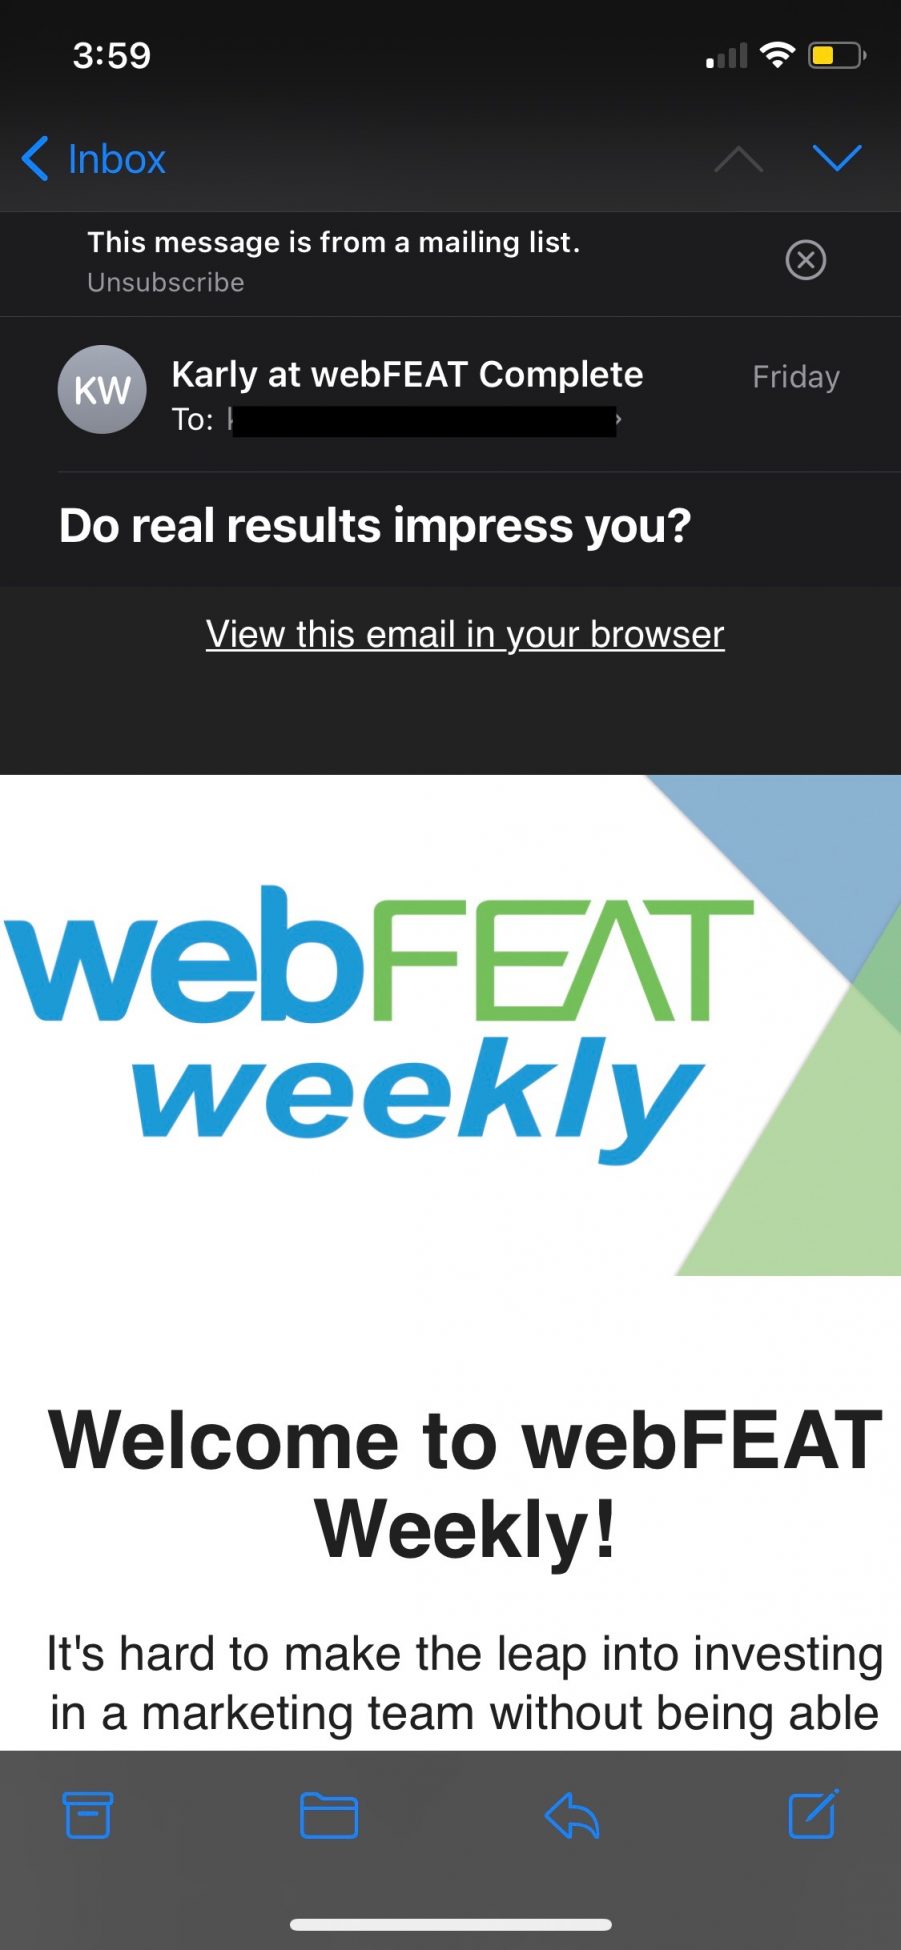 webFEAT Weekly example on mobile screen